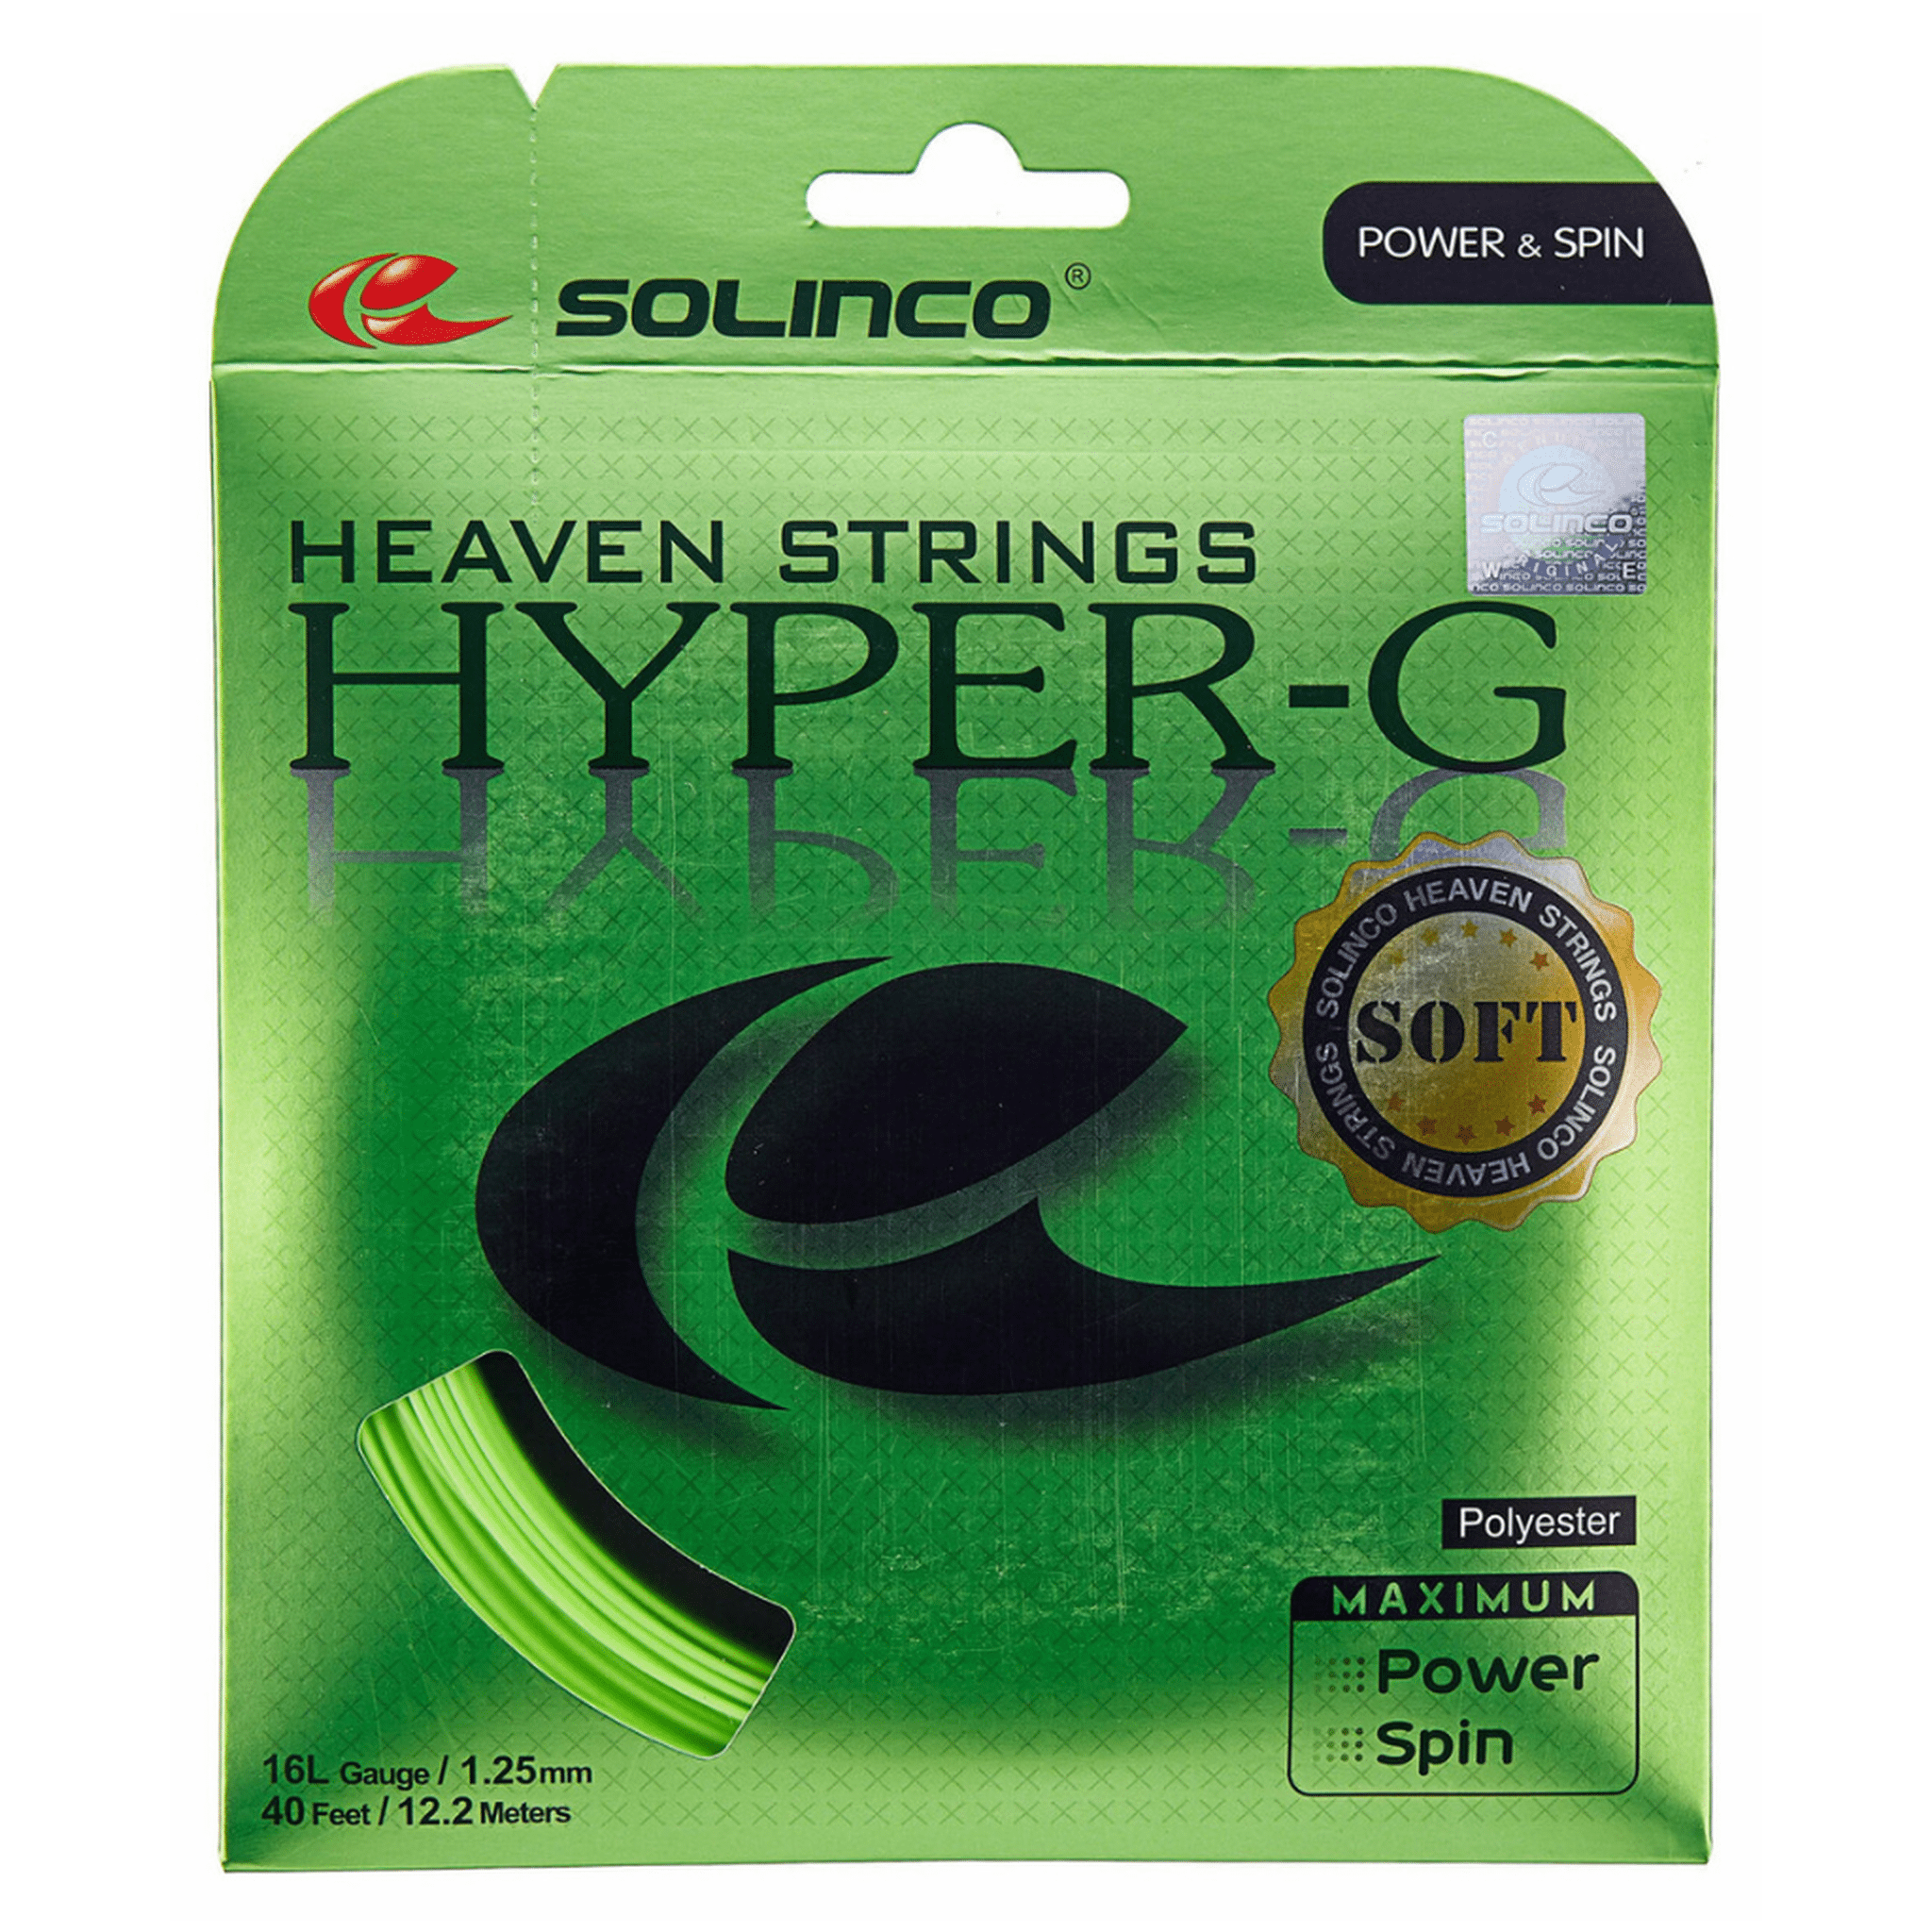 Solinco Hyper-G Soft Set (12m) - All Things Tennis ltd